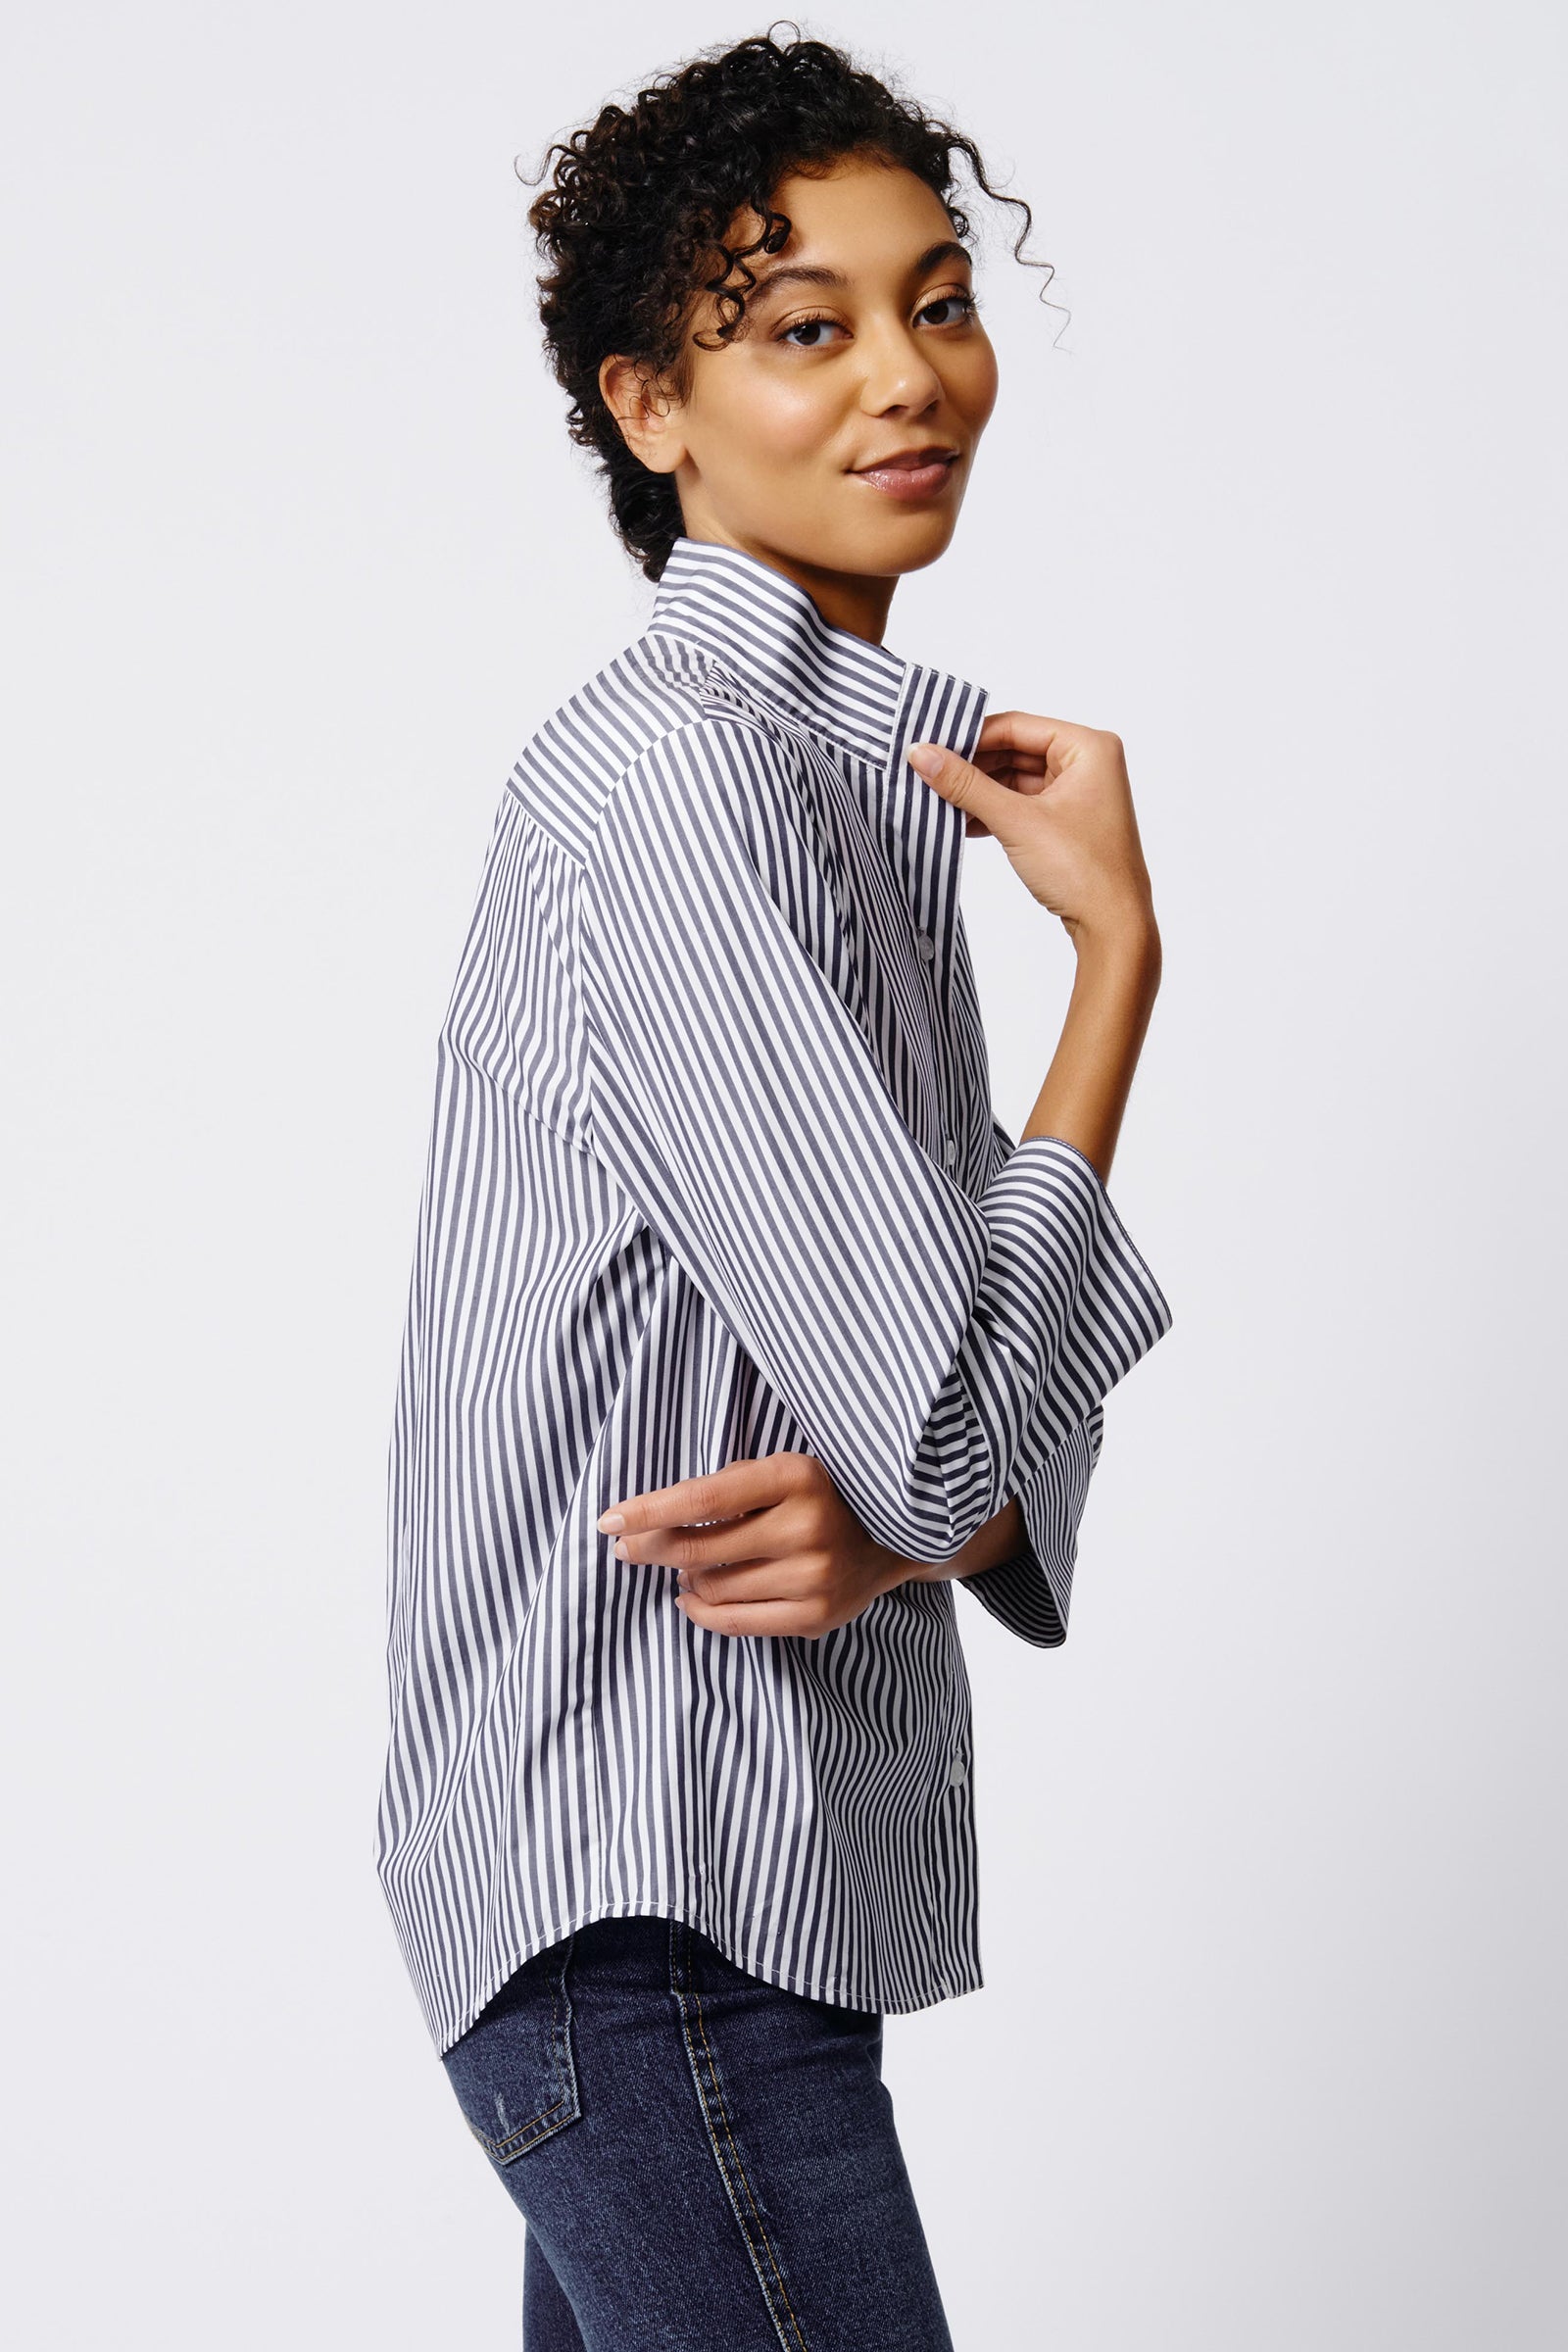 Kal Rieman Greta Placket Front Shirt in Indigo Stripe on Model Side View Crop